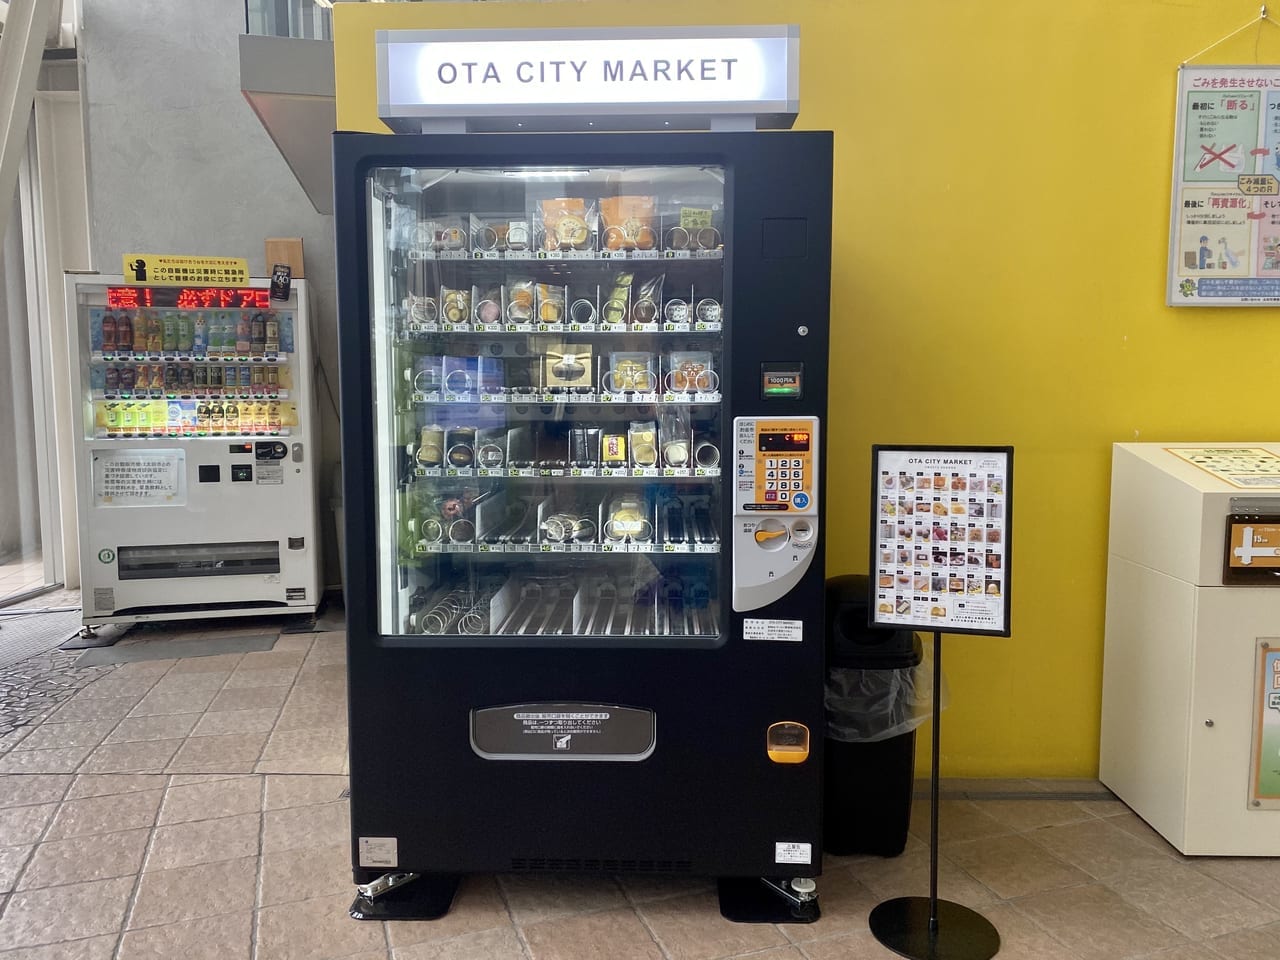 OTA CITY MARKETの自動販売機